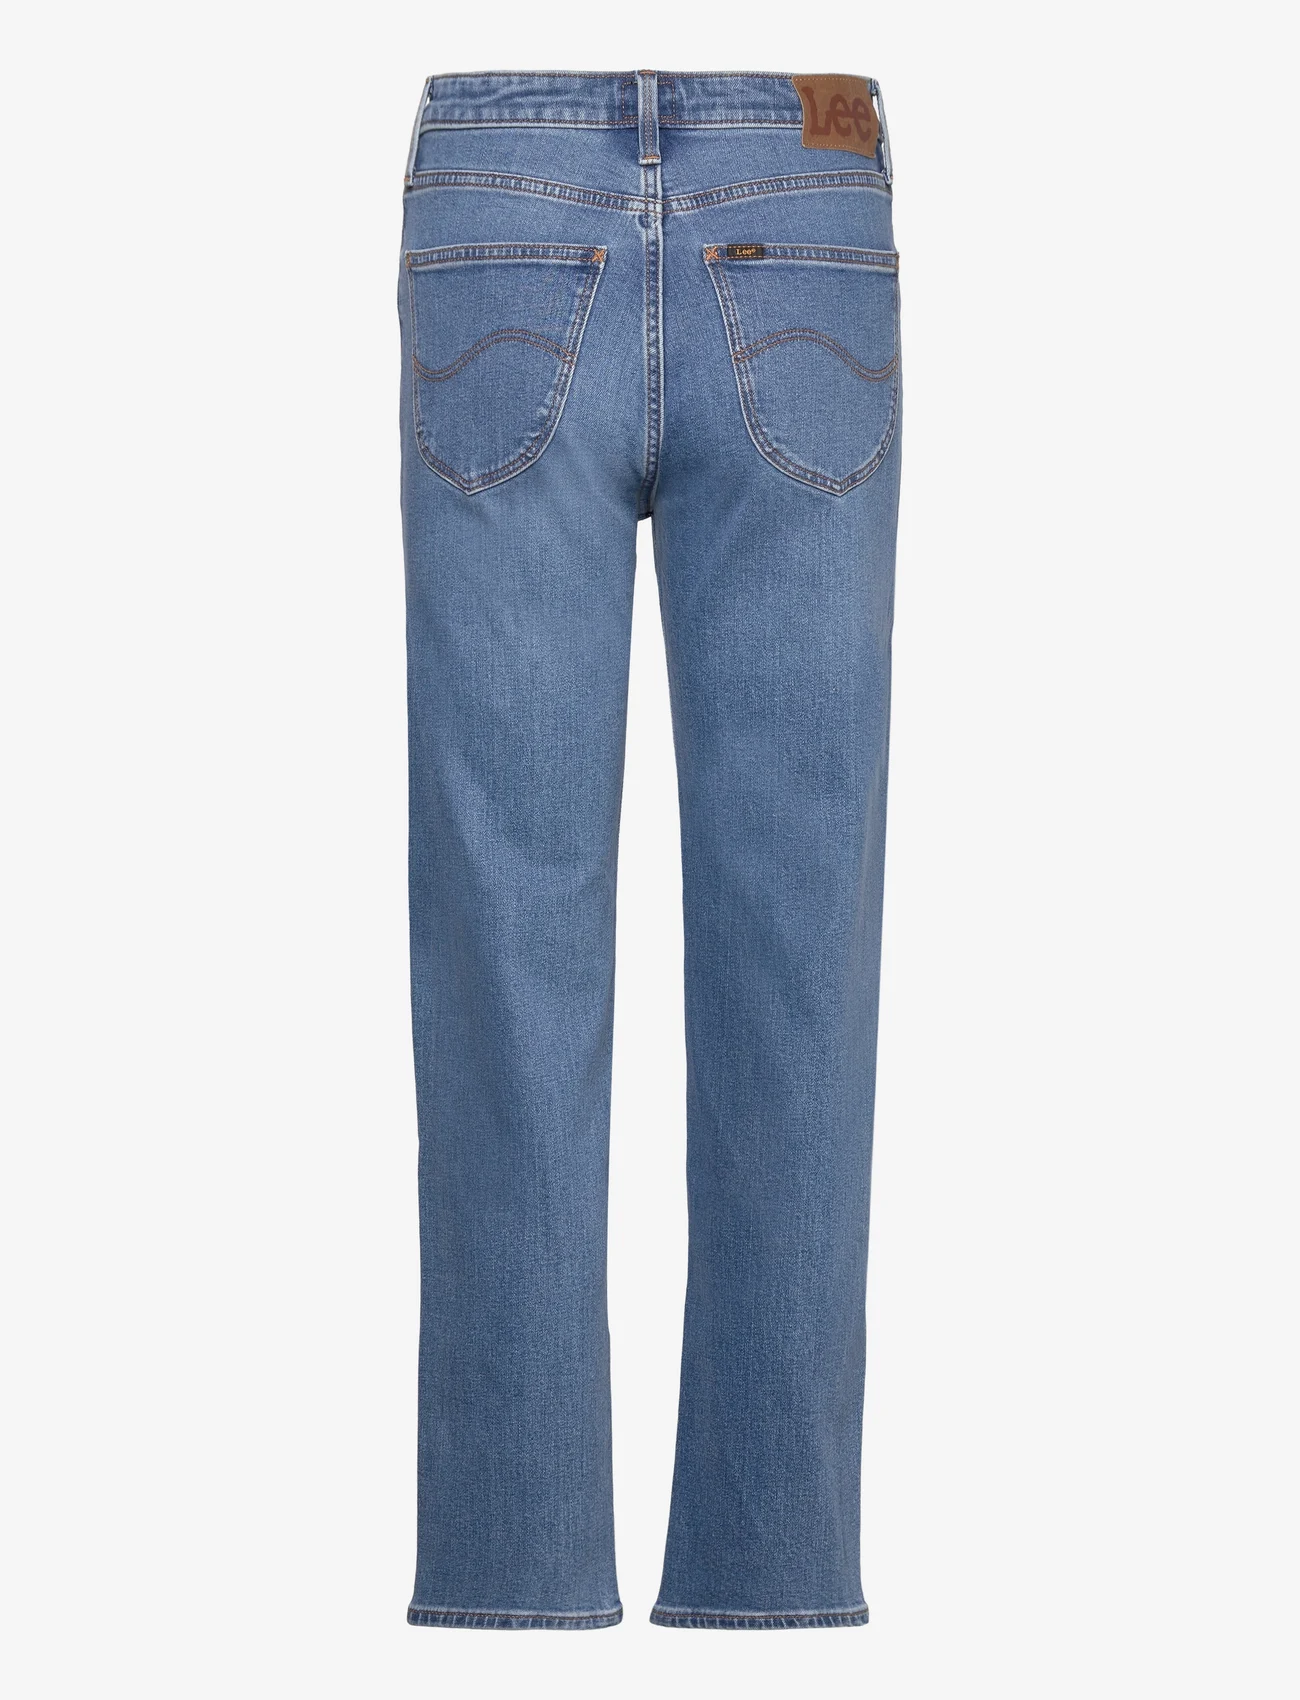 Lee Jeans - CAROL - straight jeans - rolling blue - 1